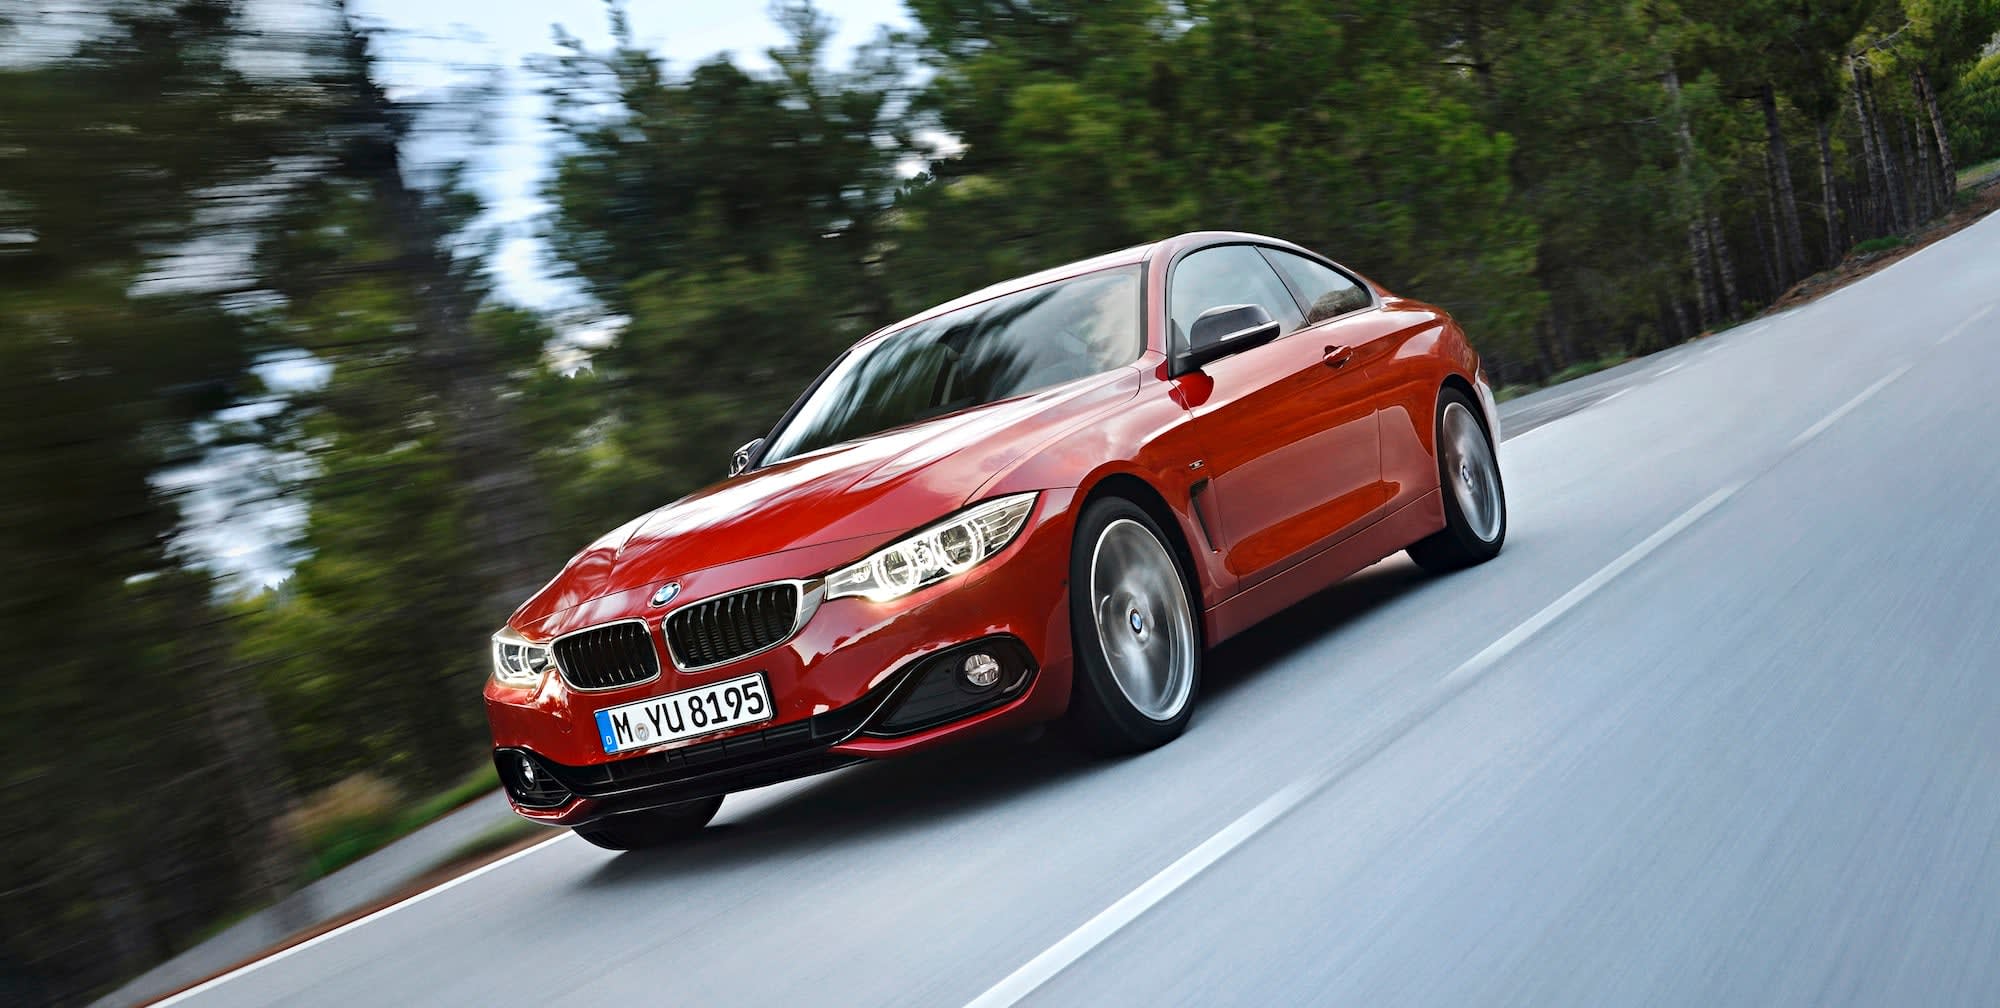 2014 BMW X3 : new diesel engine, fresh styling for mid-sized SUV